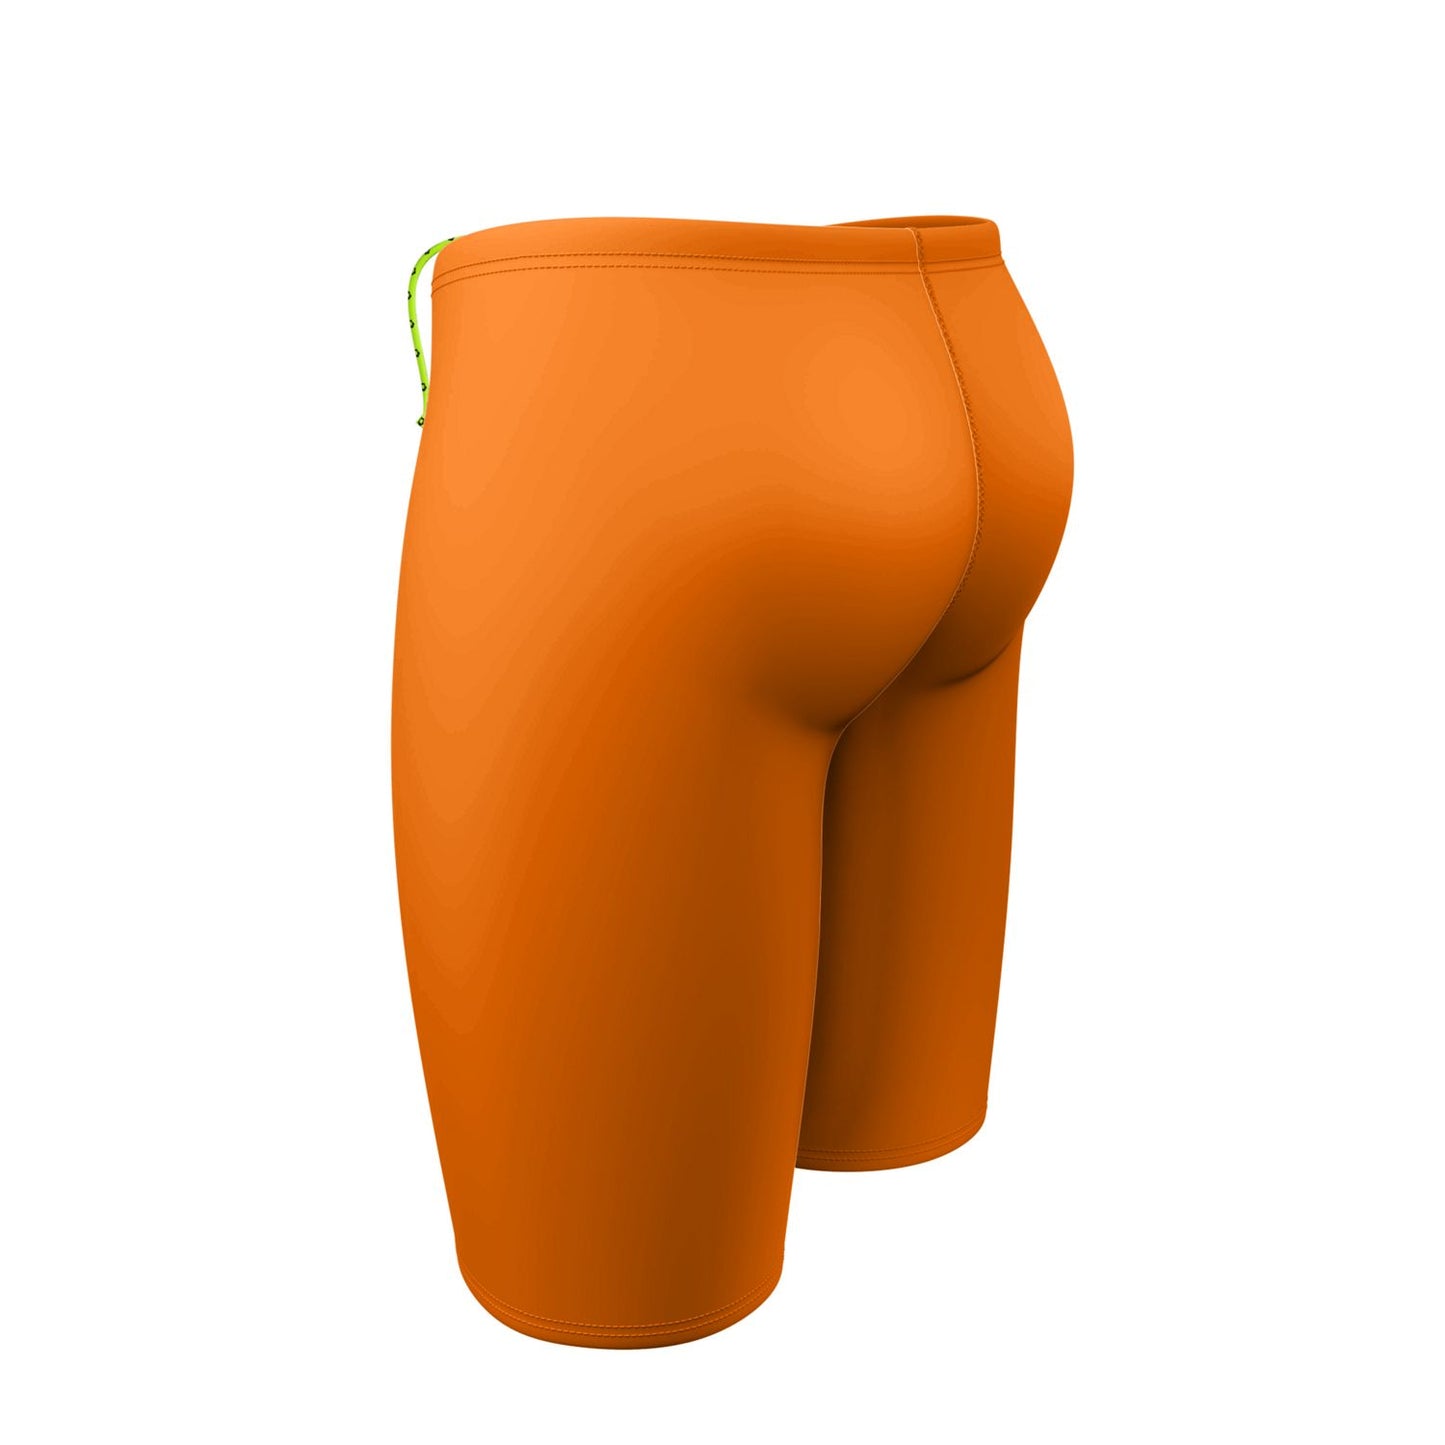 Orange Solid Jammer Swimsuit